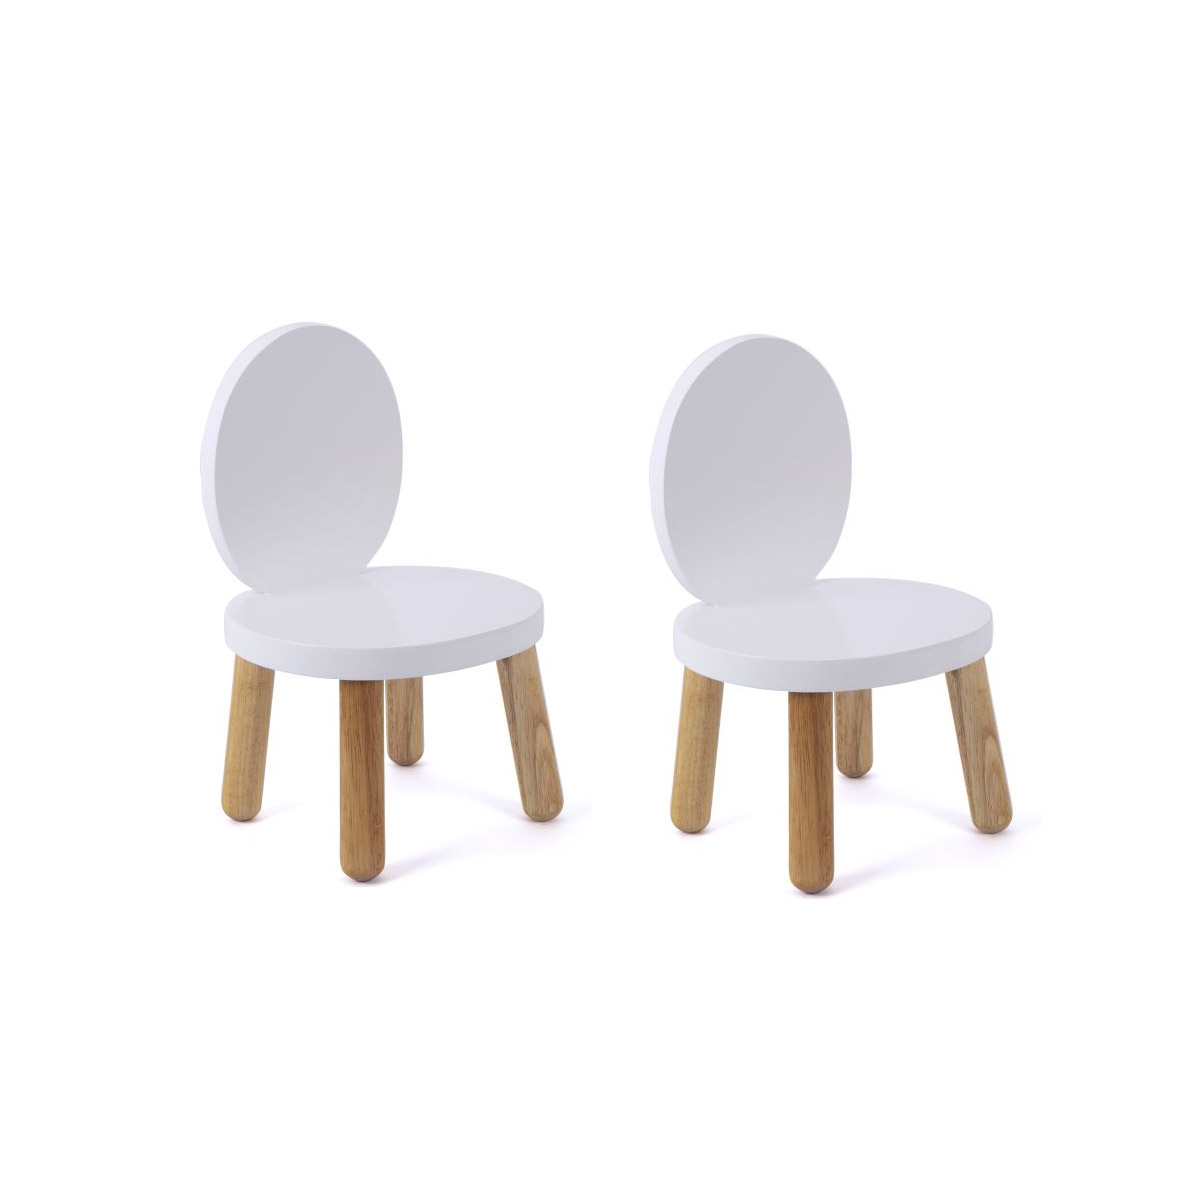 Pioupiou & Merveilles - 2 chaises enfant Ovaline BLANC Pioupiou & Merveilles